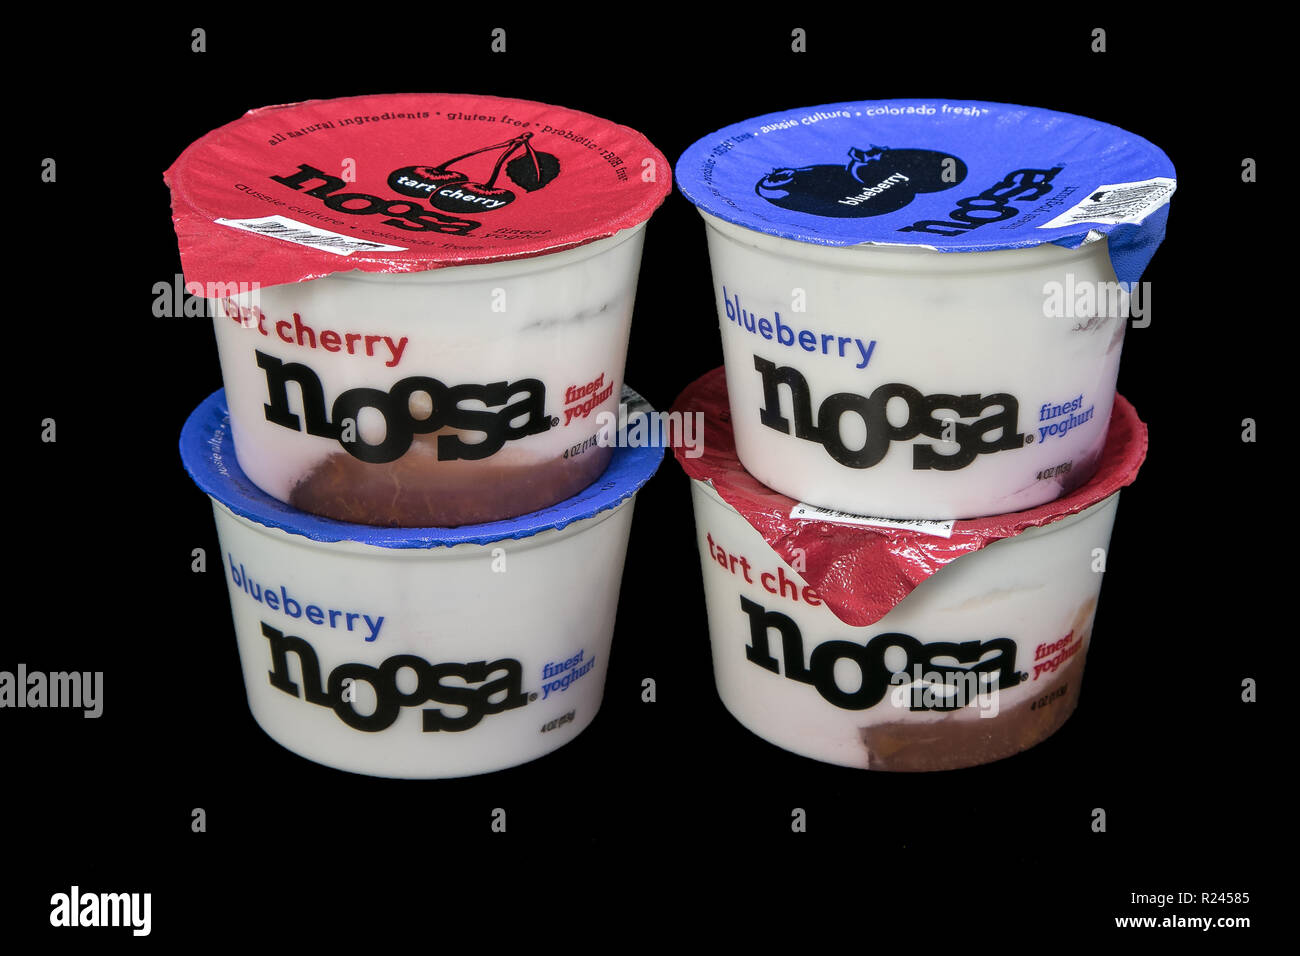 New York, November 12, 2018: Four tubs of Noosa yogurt on black background. Stock Photo